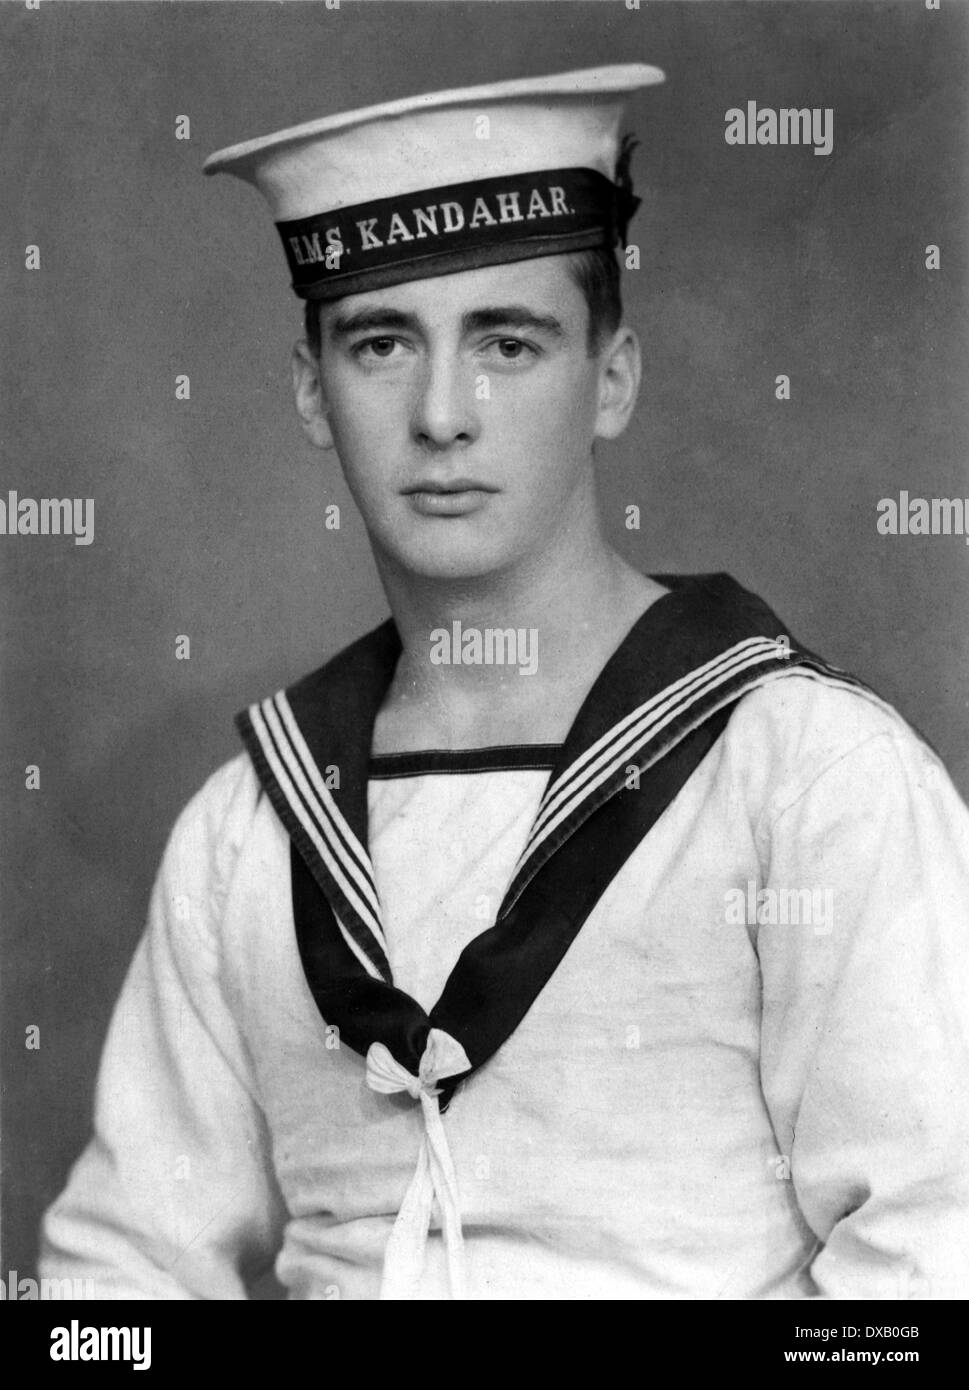 Royal Navy SAILOR OF WW11 IN TROPICAL UNIFORM Stock Photo - Alamy